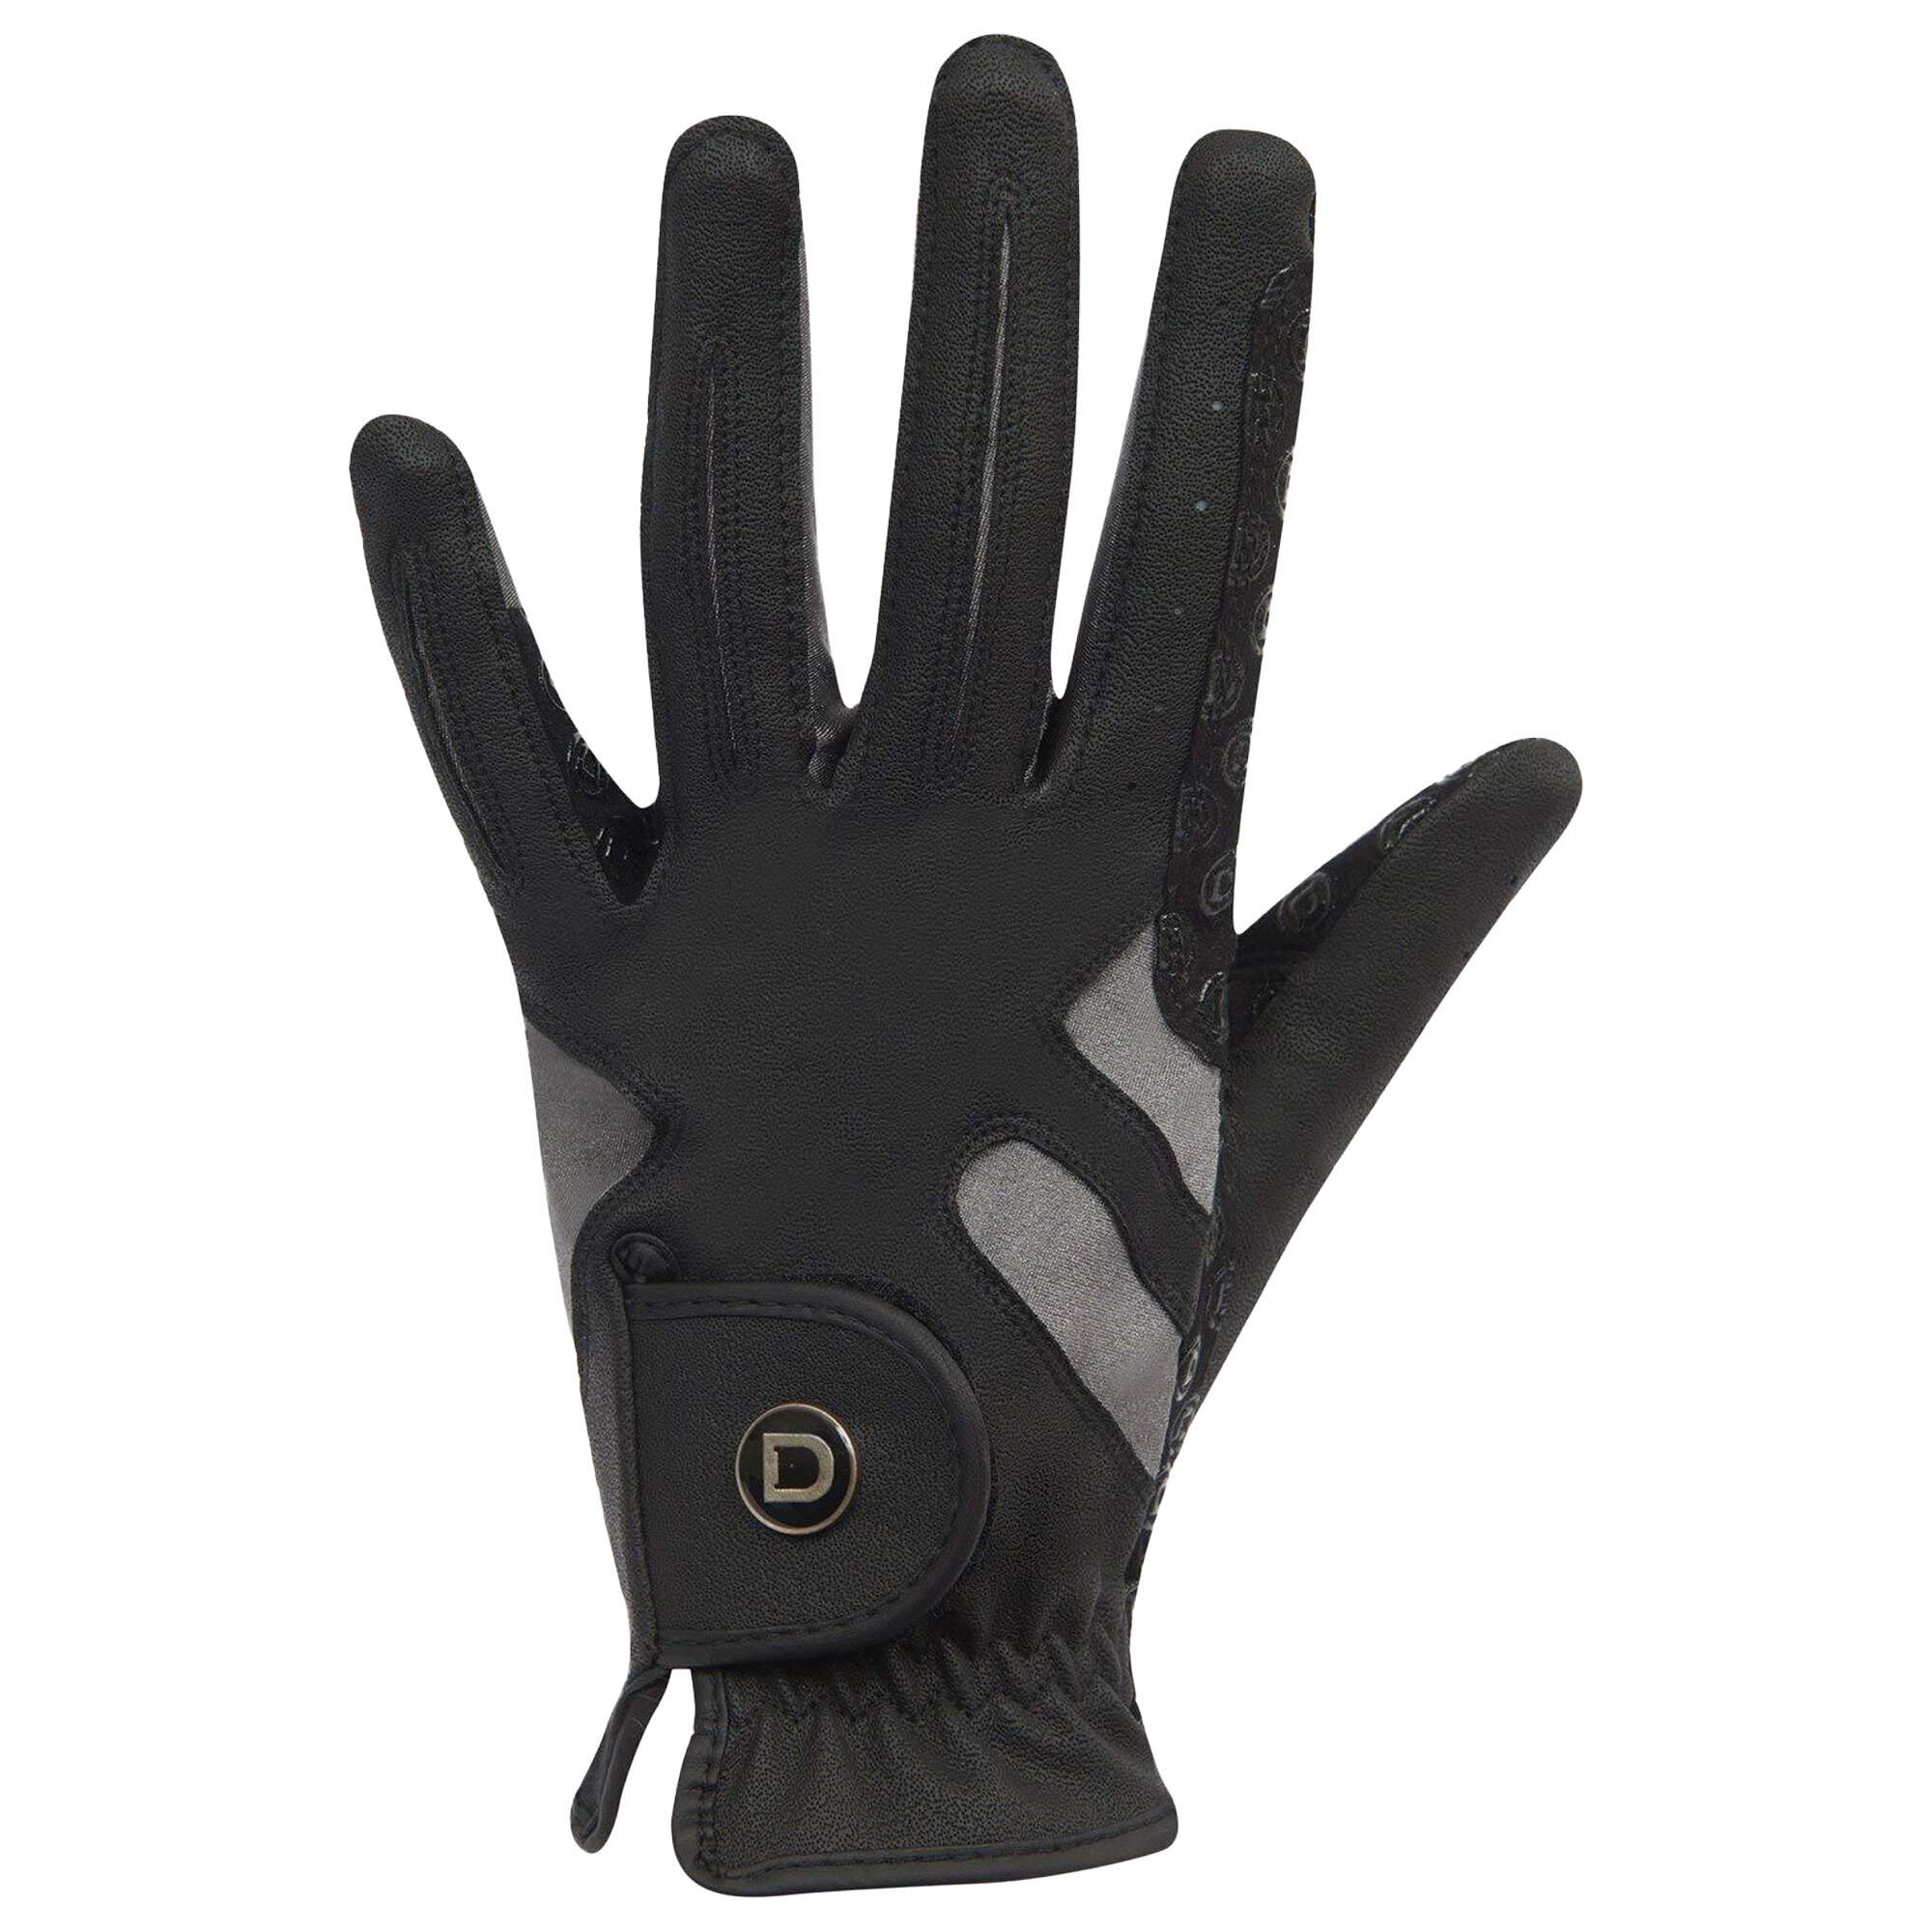 DUBLIN Unisex Coolit Gel Touch Fastening Riding Gloves (Black/Grey)